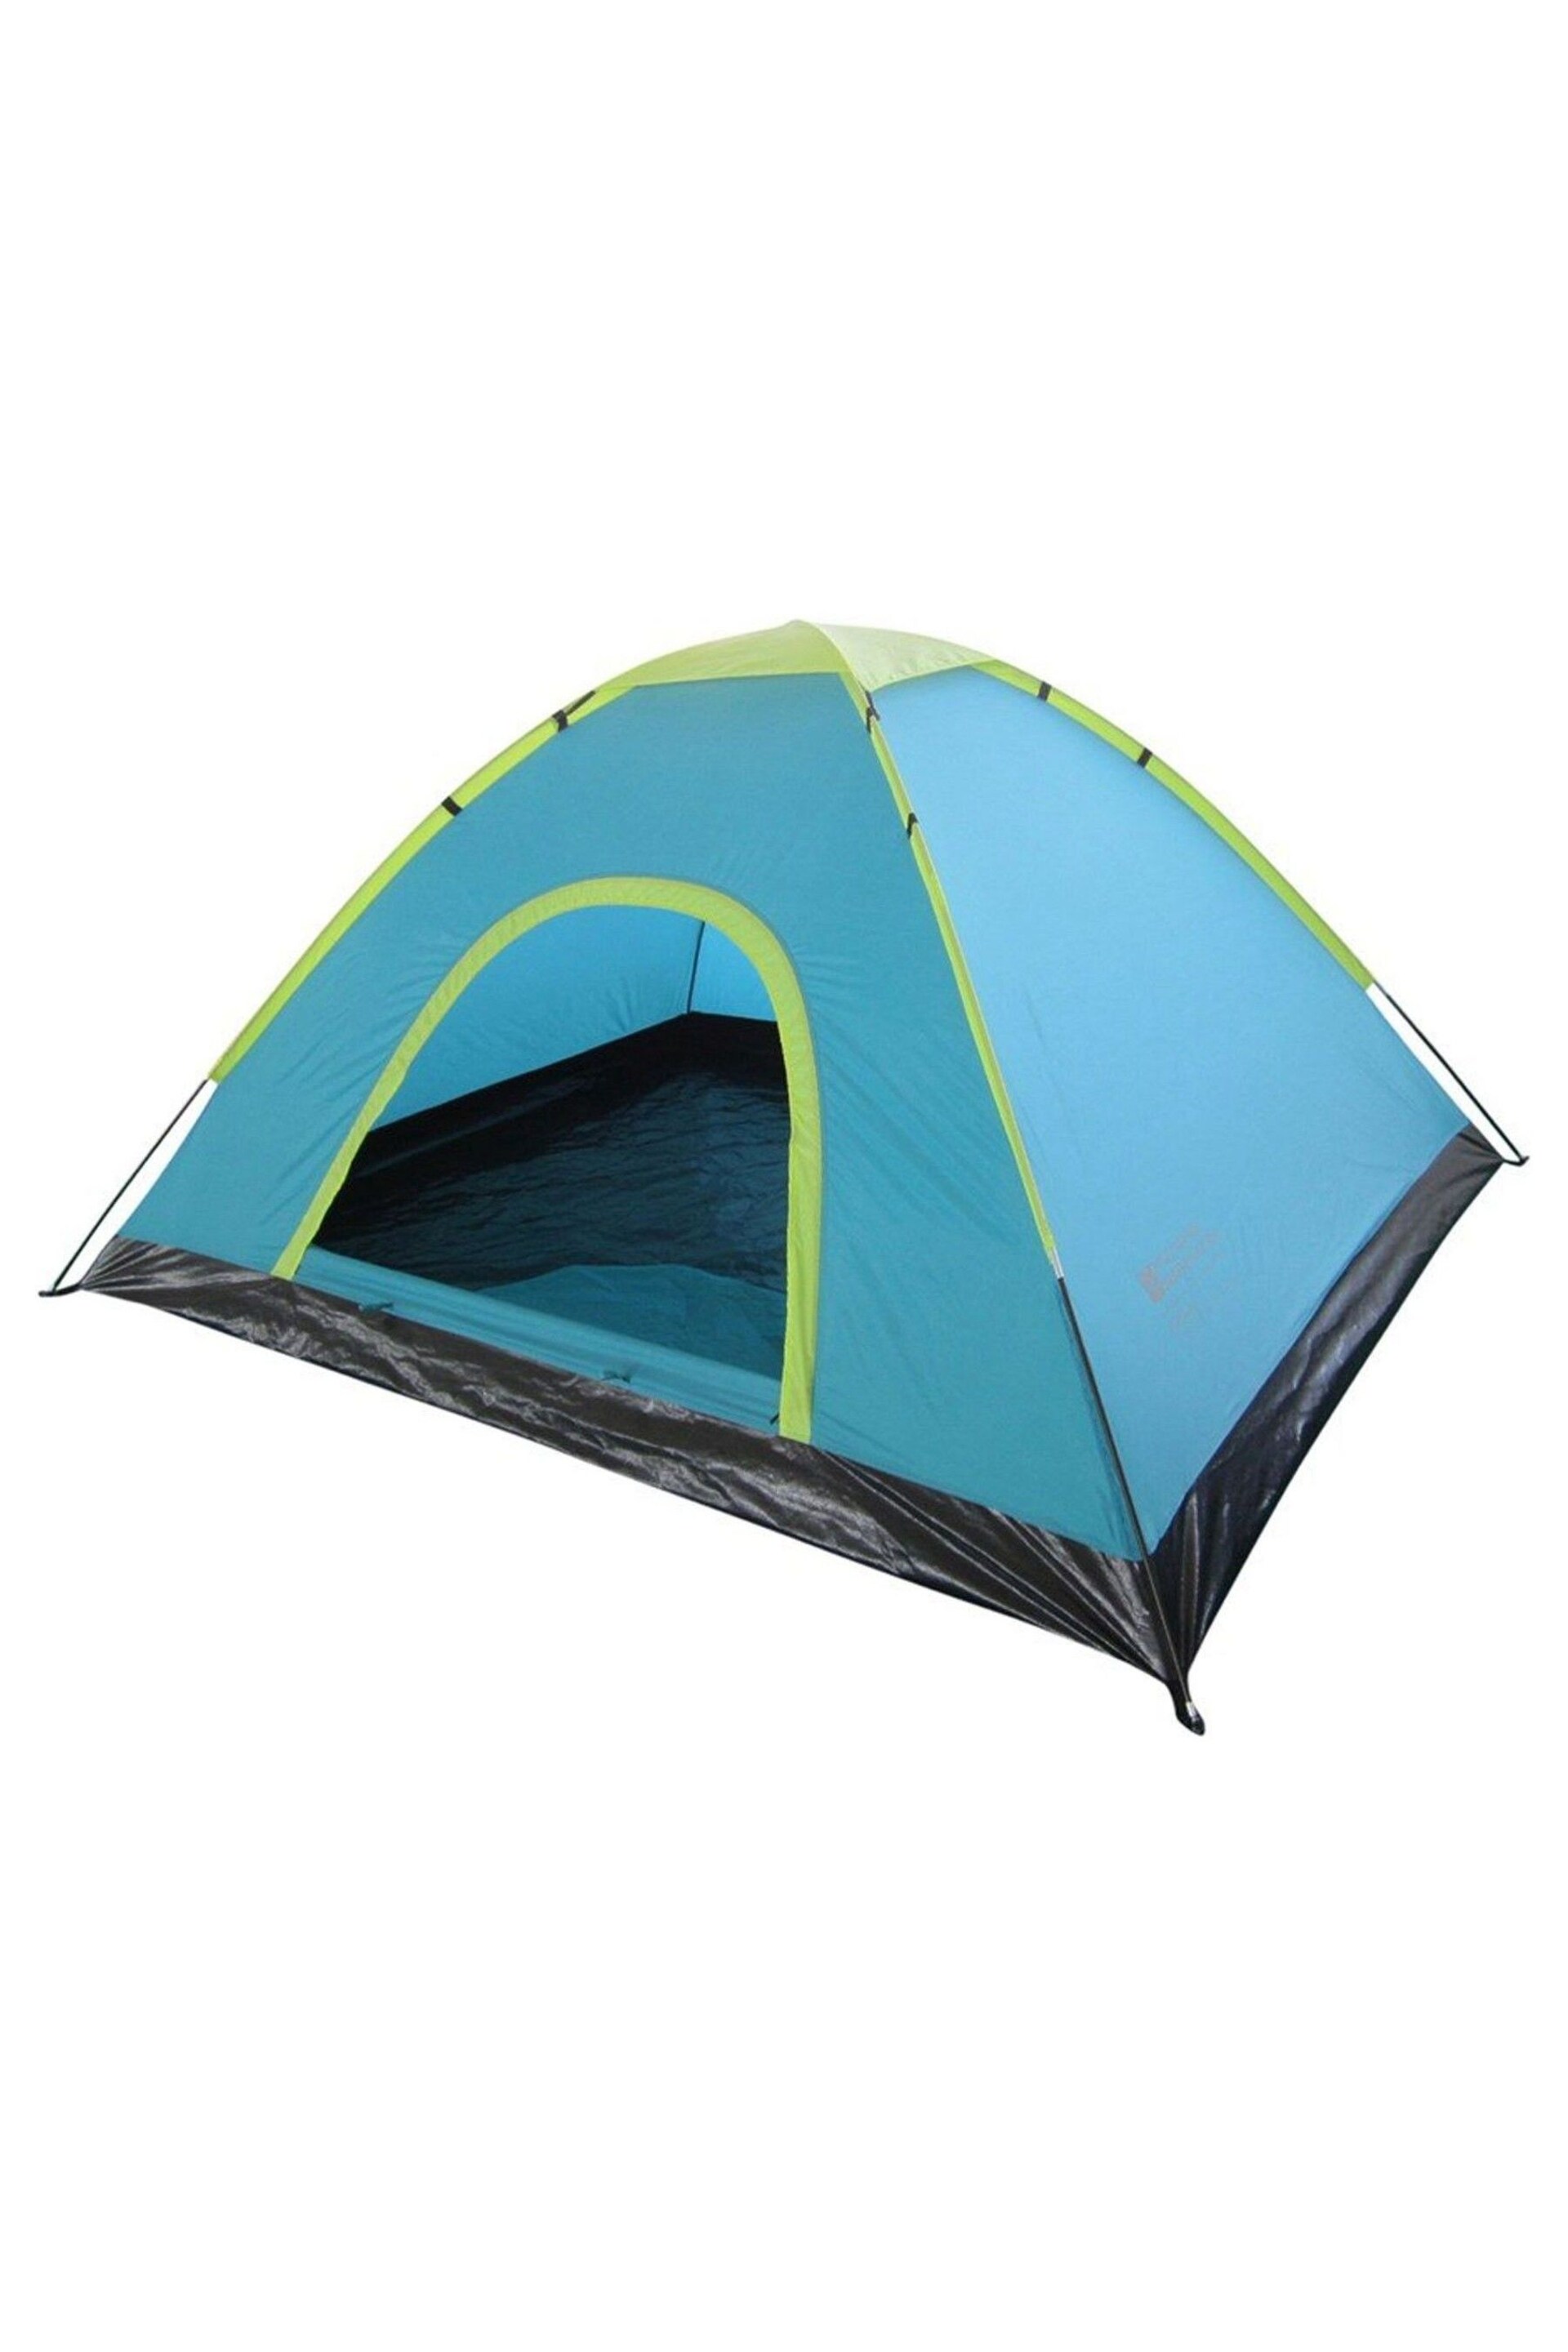 Mountain Warehouse Dark Black Camping Summit 250 Square Sleeping Tent - Image 1 of 1